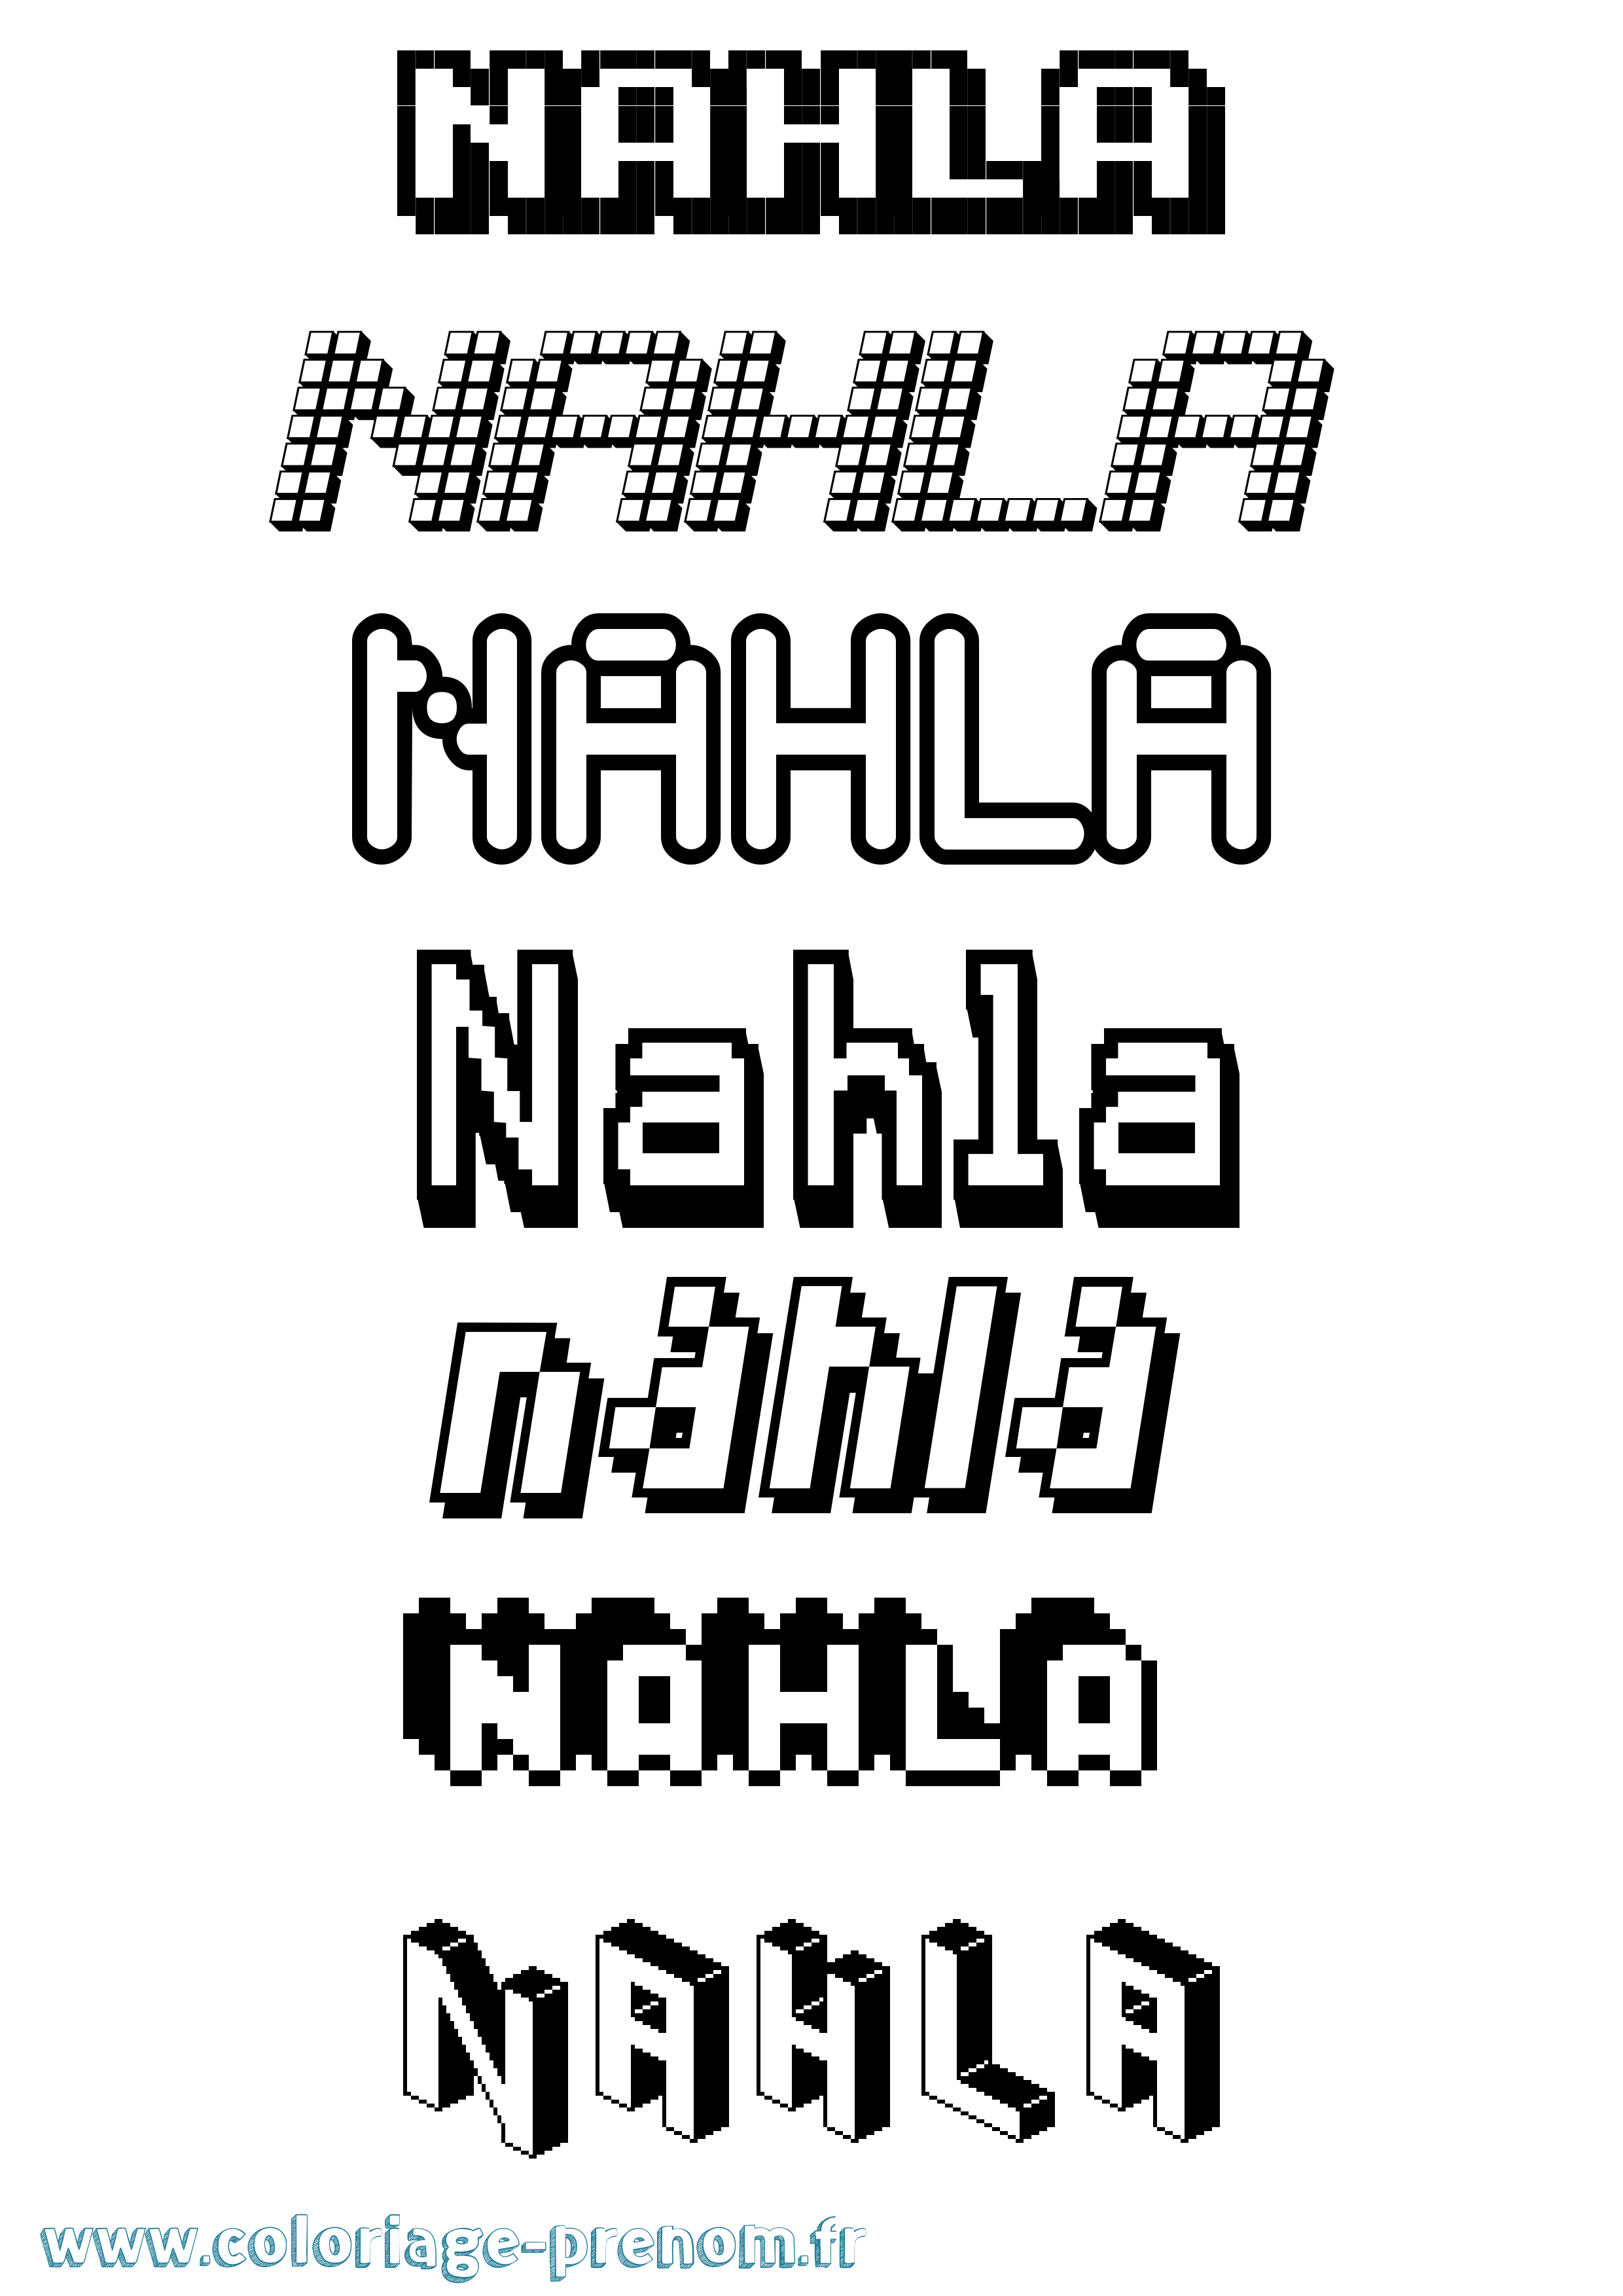 Coloriage prénom Nahla